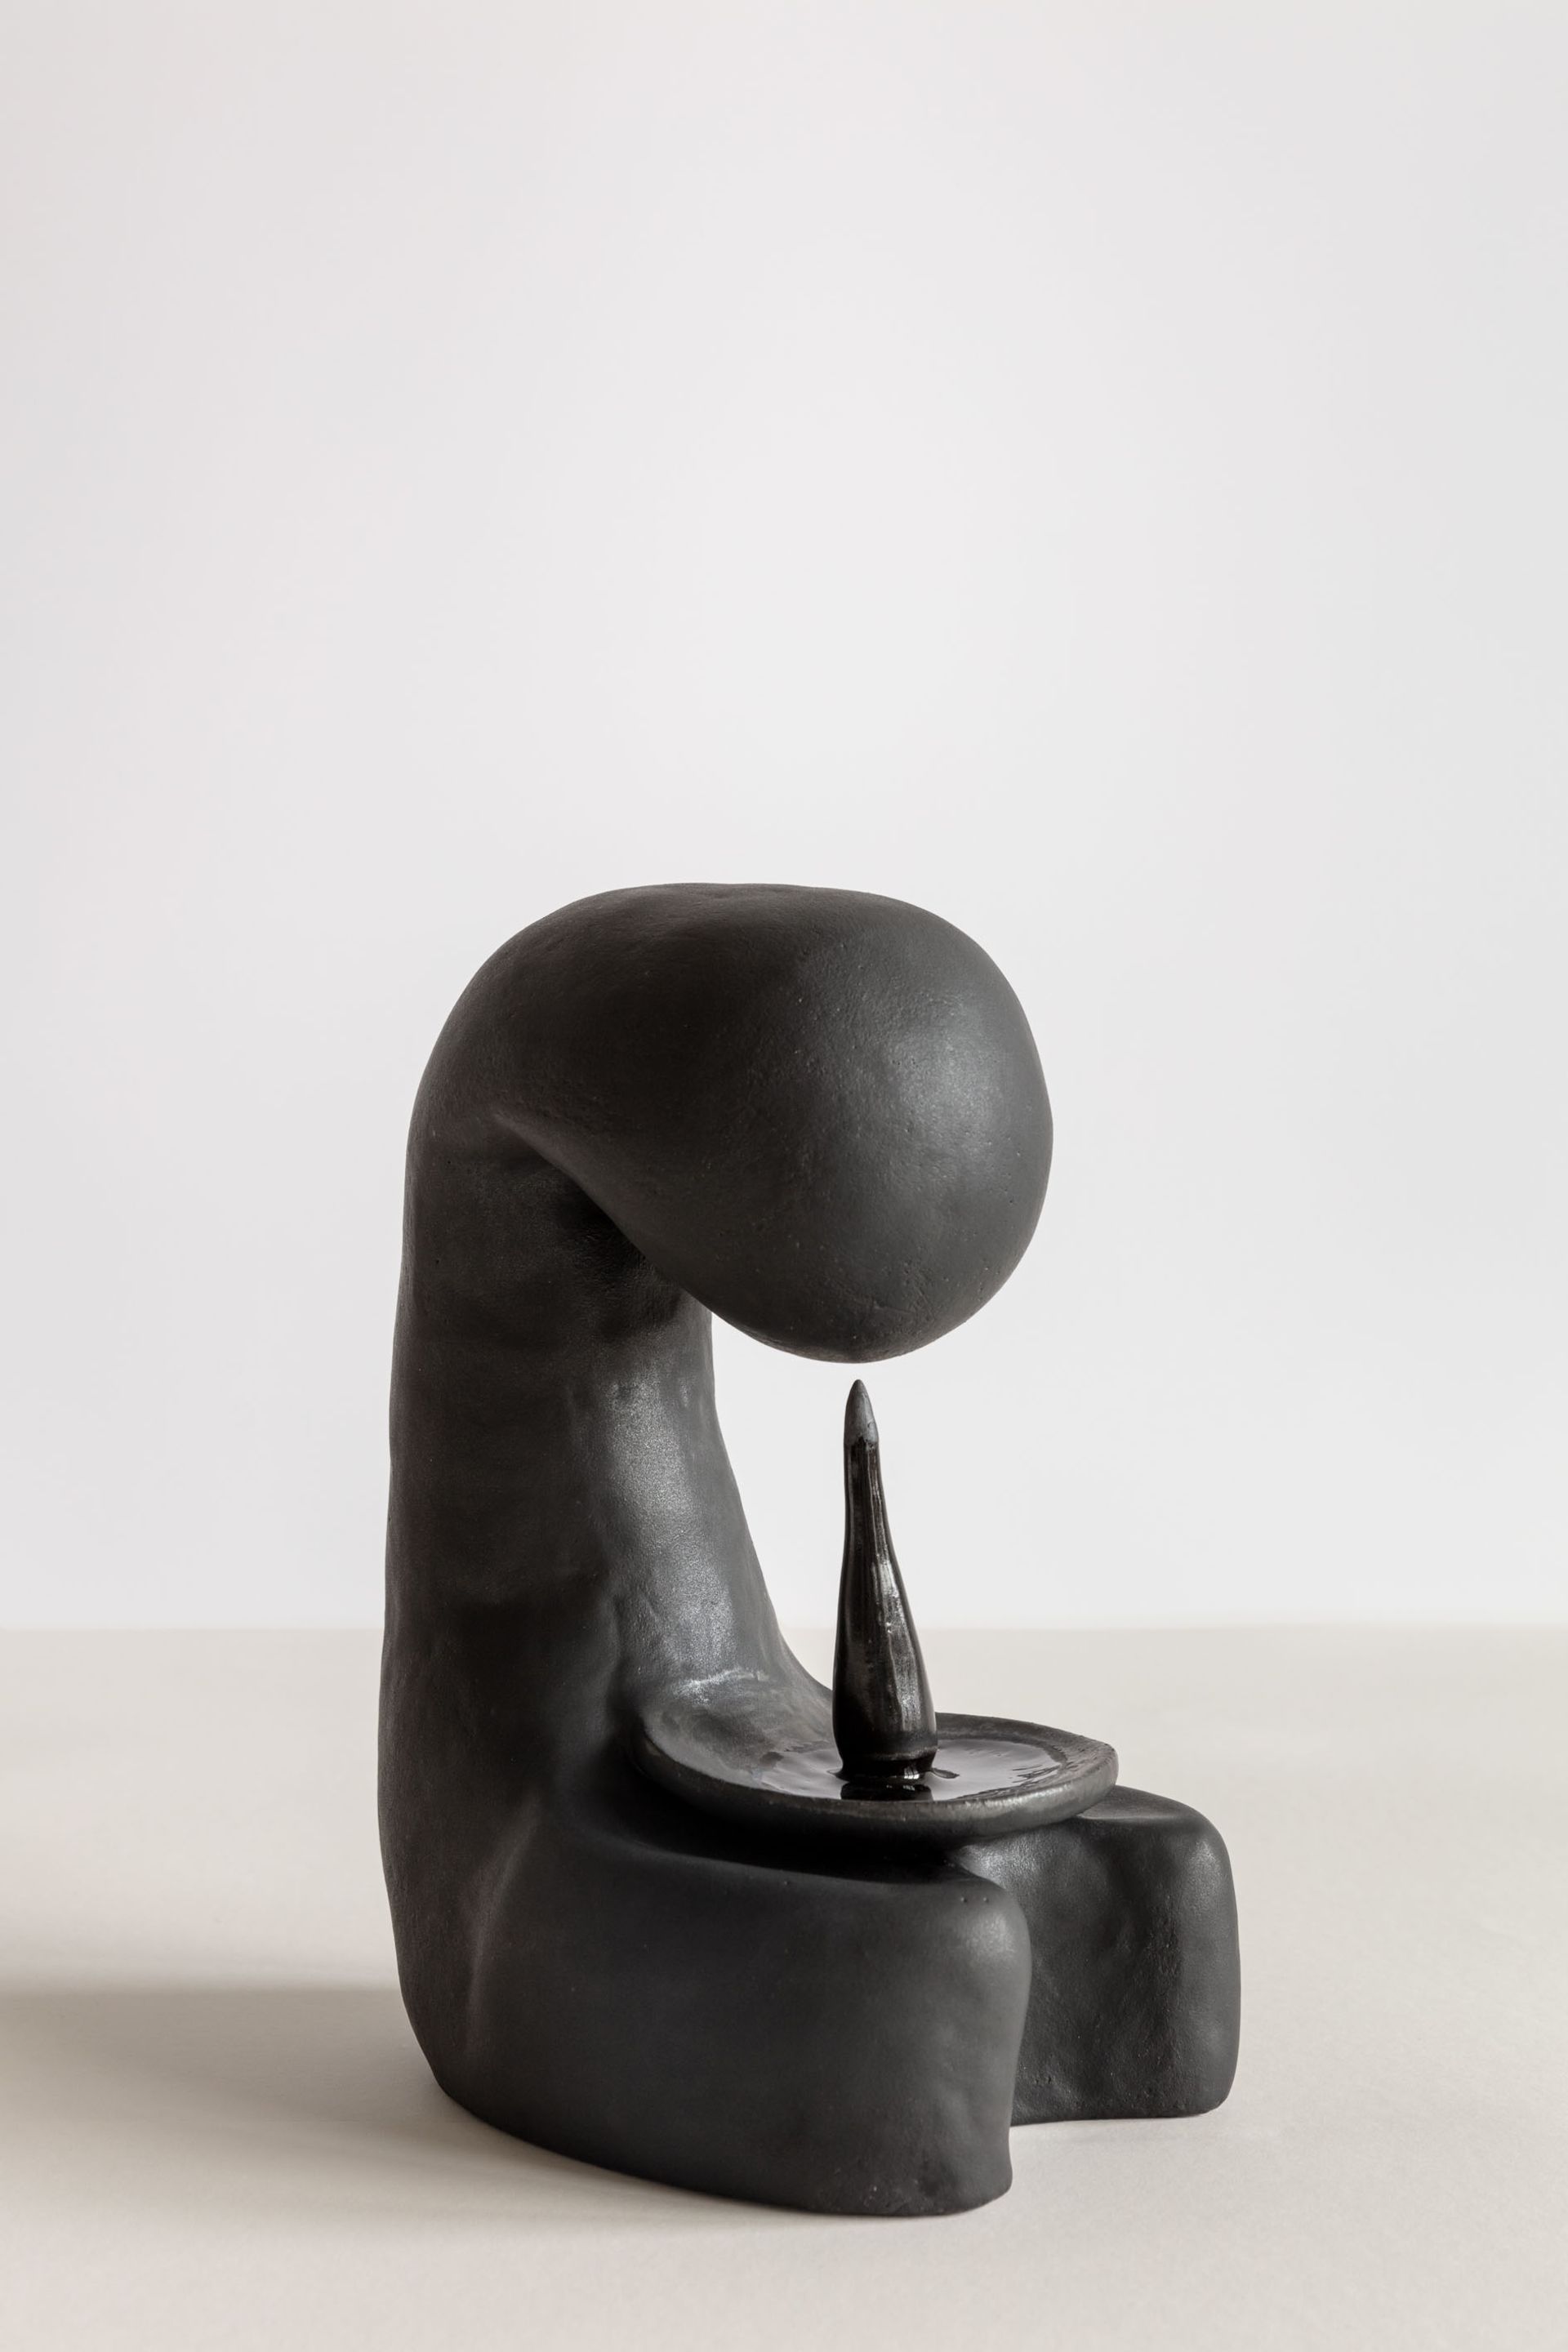 Veronika Hilger, Untitled / ohne Titel, 2022, Ceramic, glazed, 28 × 24.5 x 19 cm